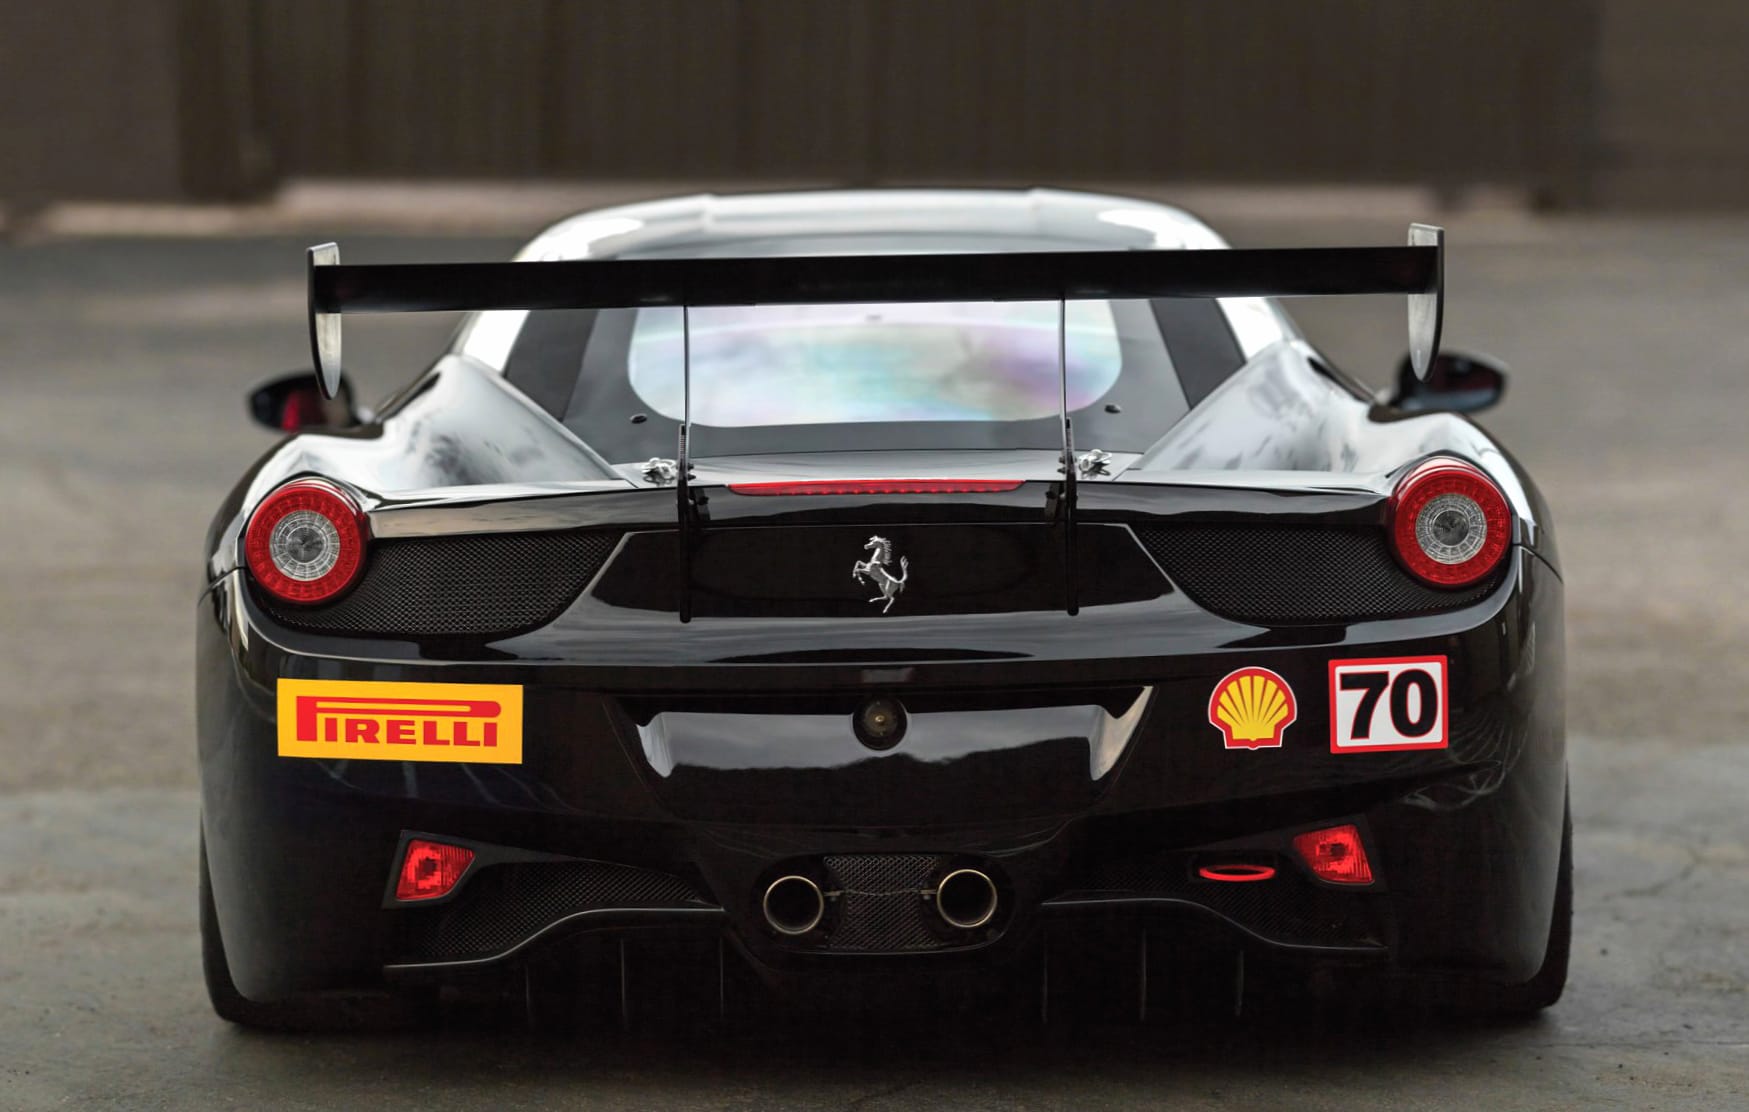 Ferrari 458 Challenge Evoluzione at 1600 x 1200 size wallpapers HD quality